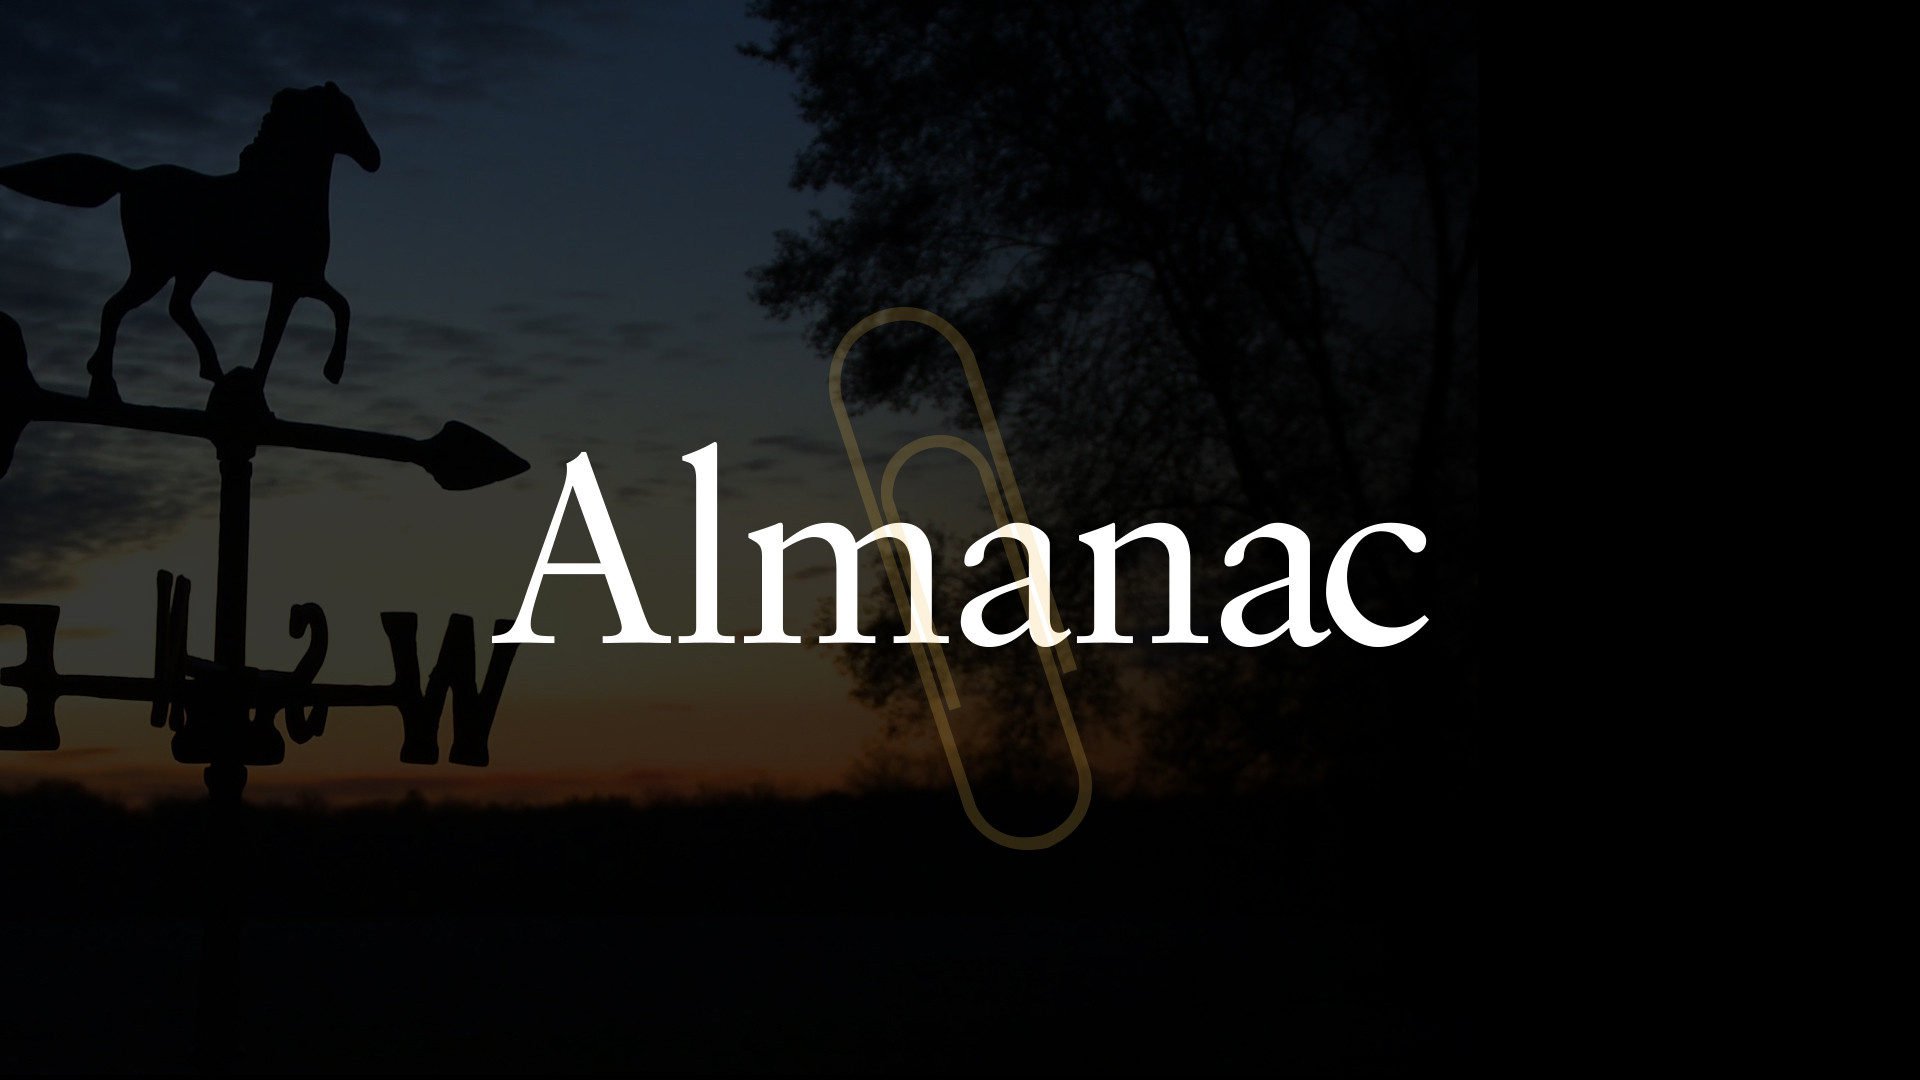 Almanac HD wallpapers, Desktop wallpaper - most viewed